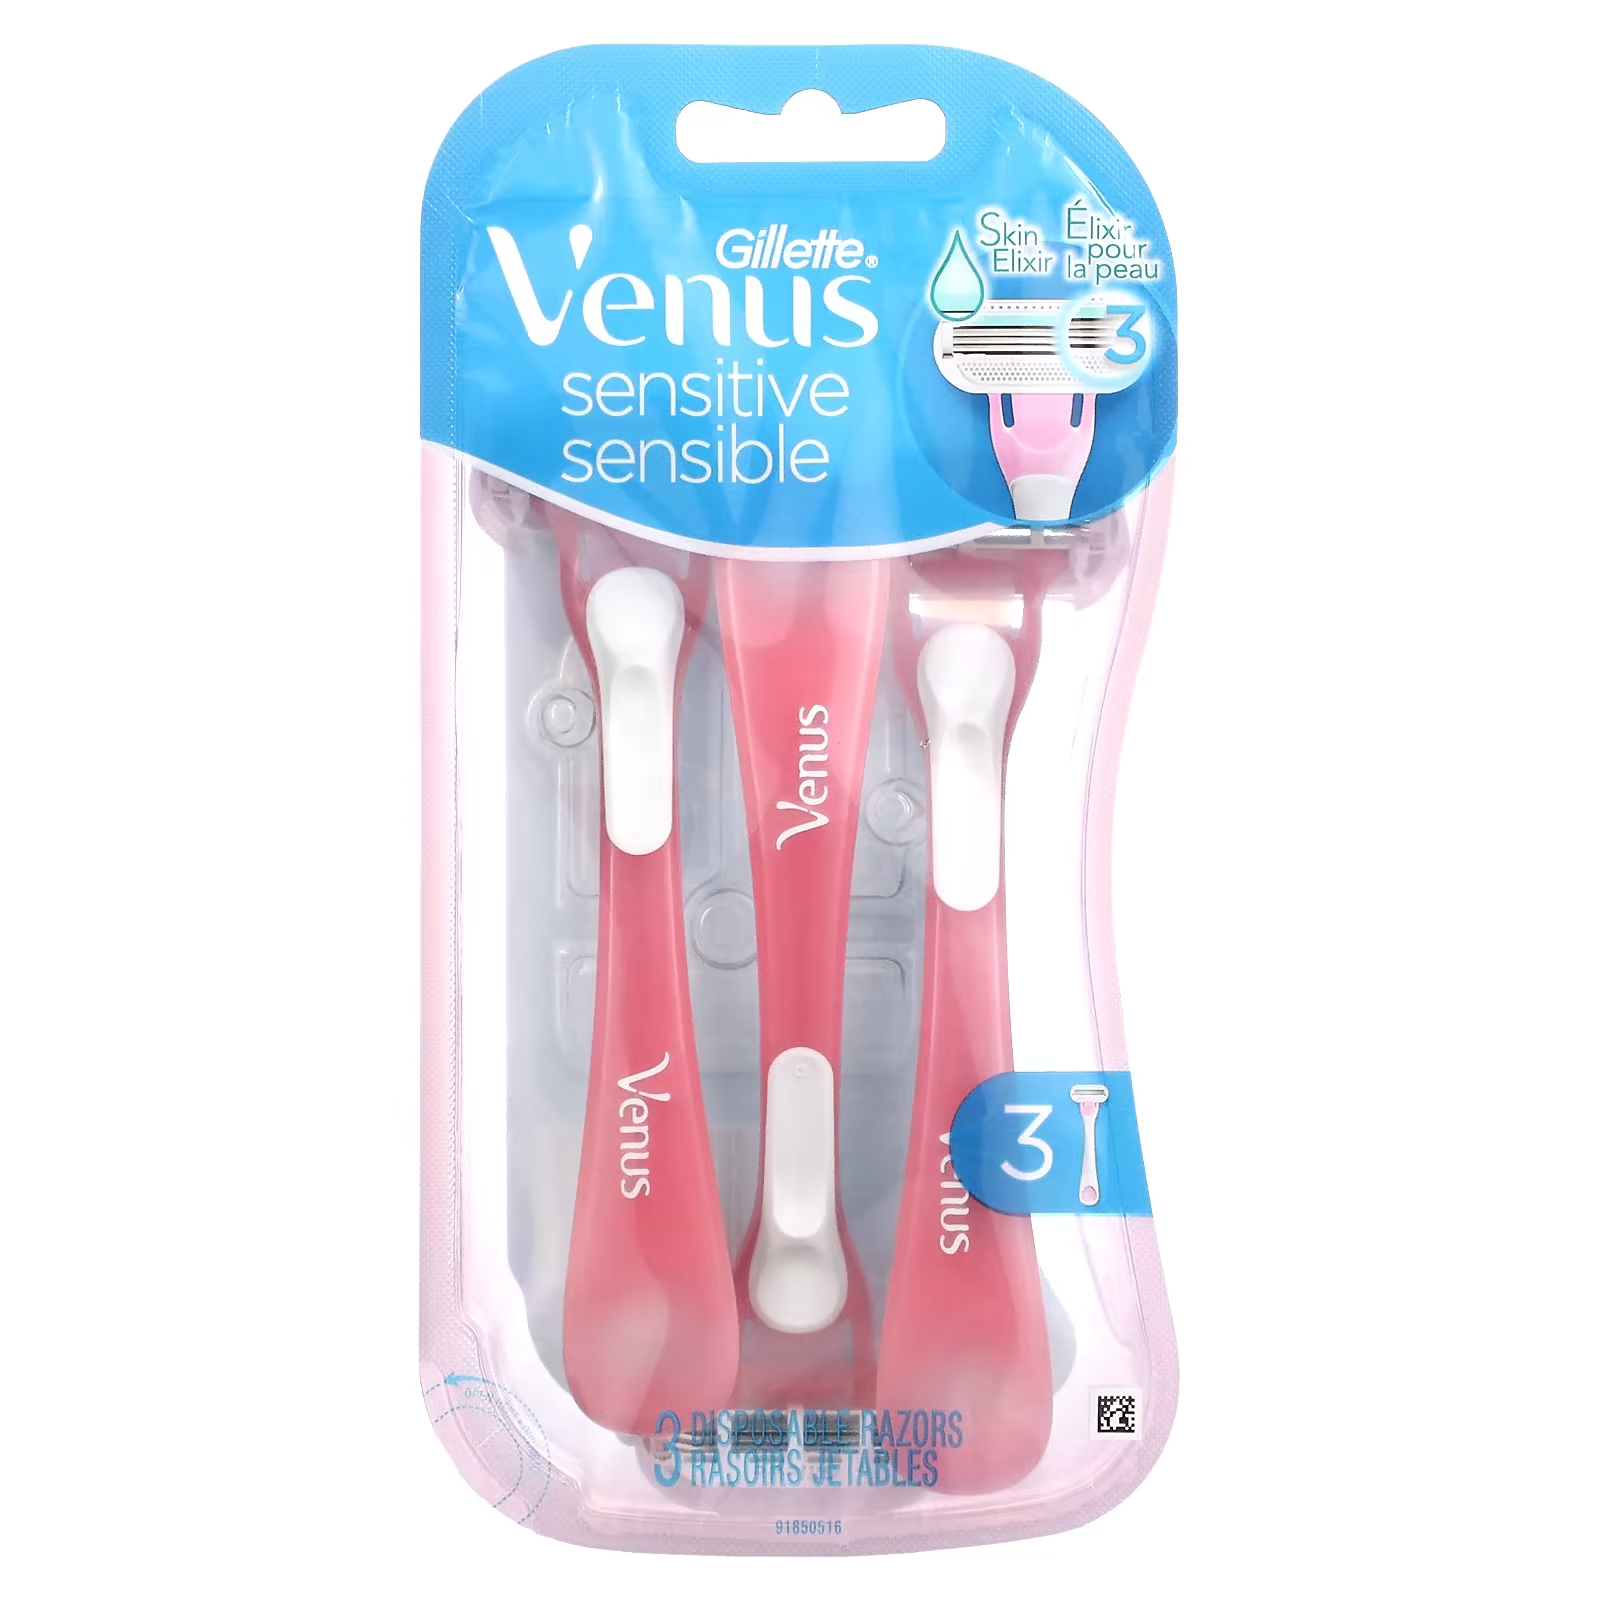 Одноразовые бритвы Gillette Venus Sensitive, 3 шт одноразовые бритвы gillette venus tropical 2 шт